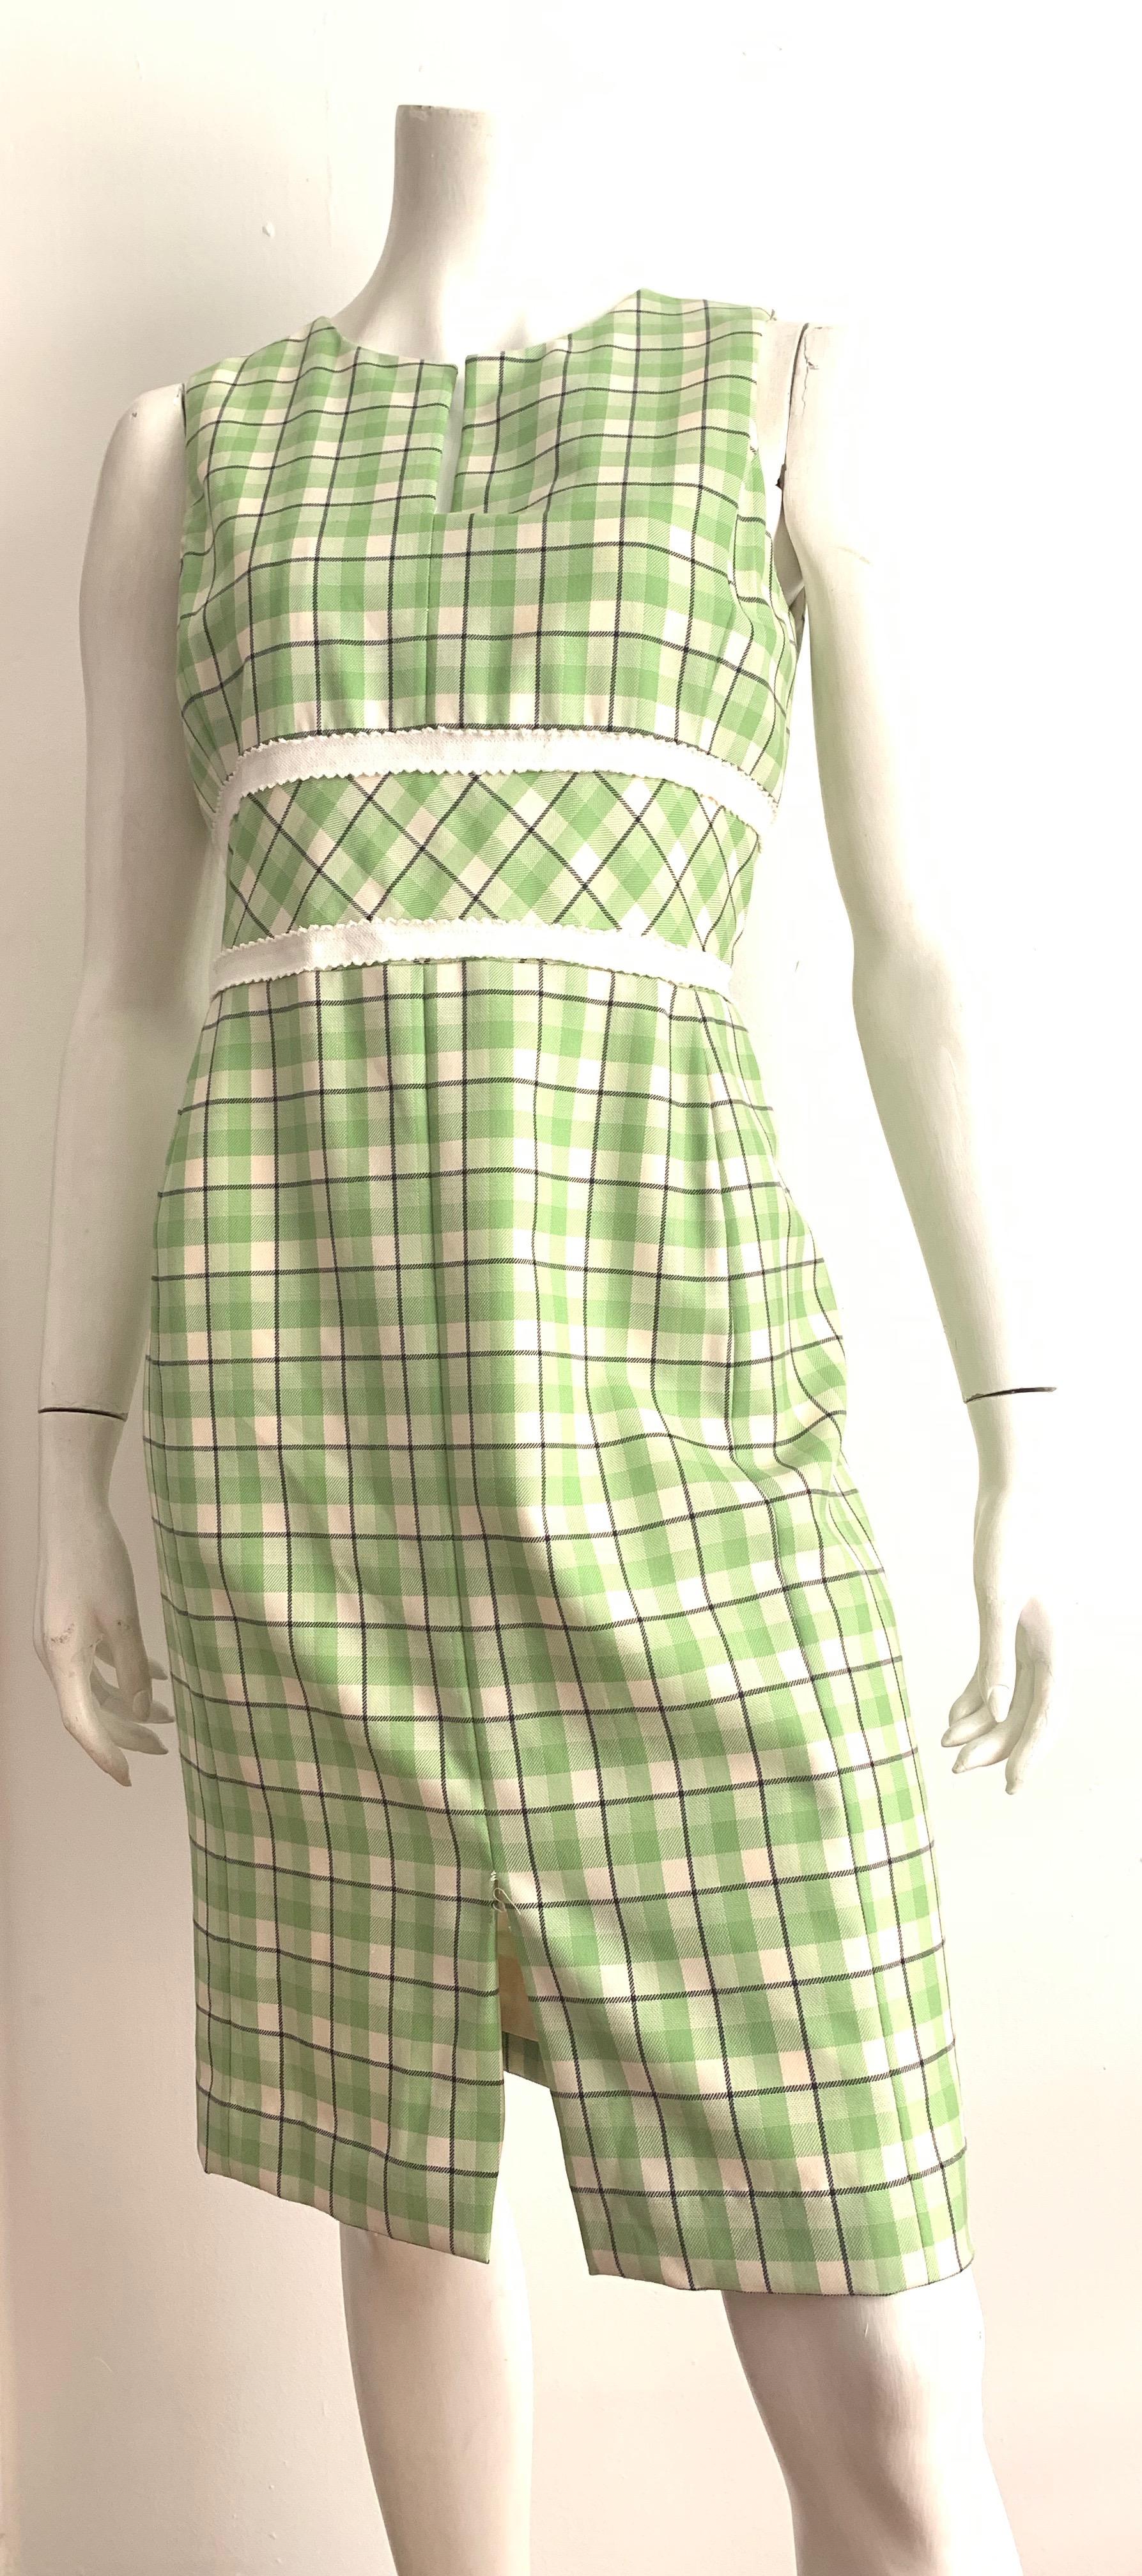 Oscar de la Renta wool plaid sleeveless dress is a size 6.
The waist on this dress is 30. 1/2